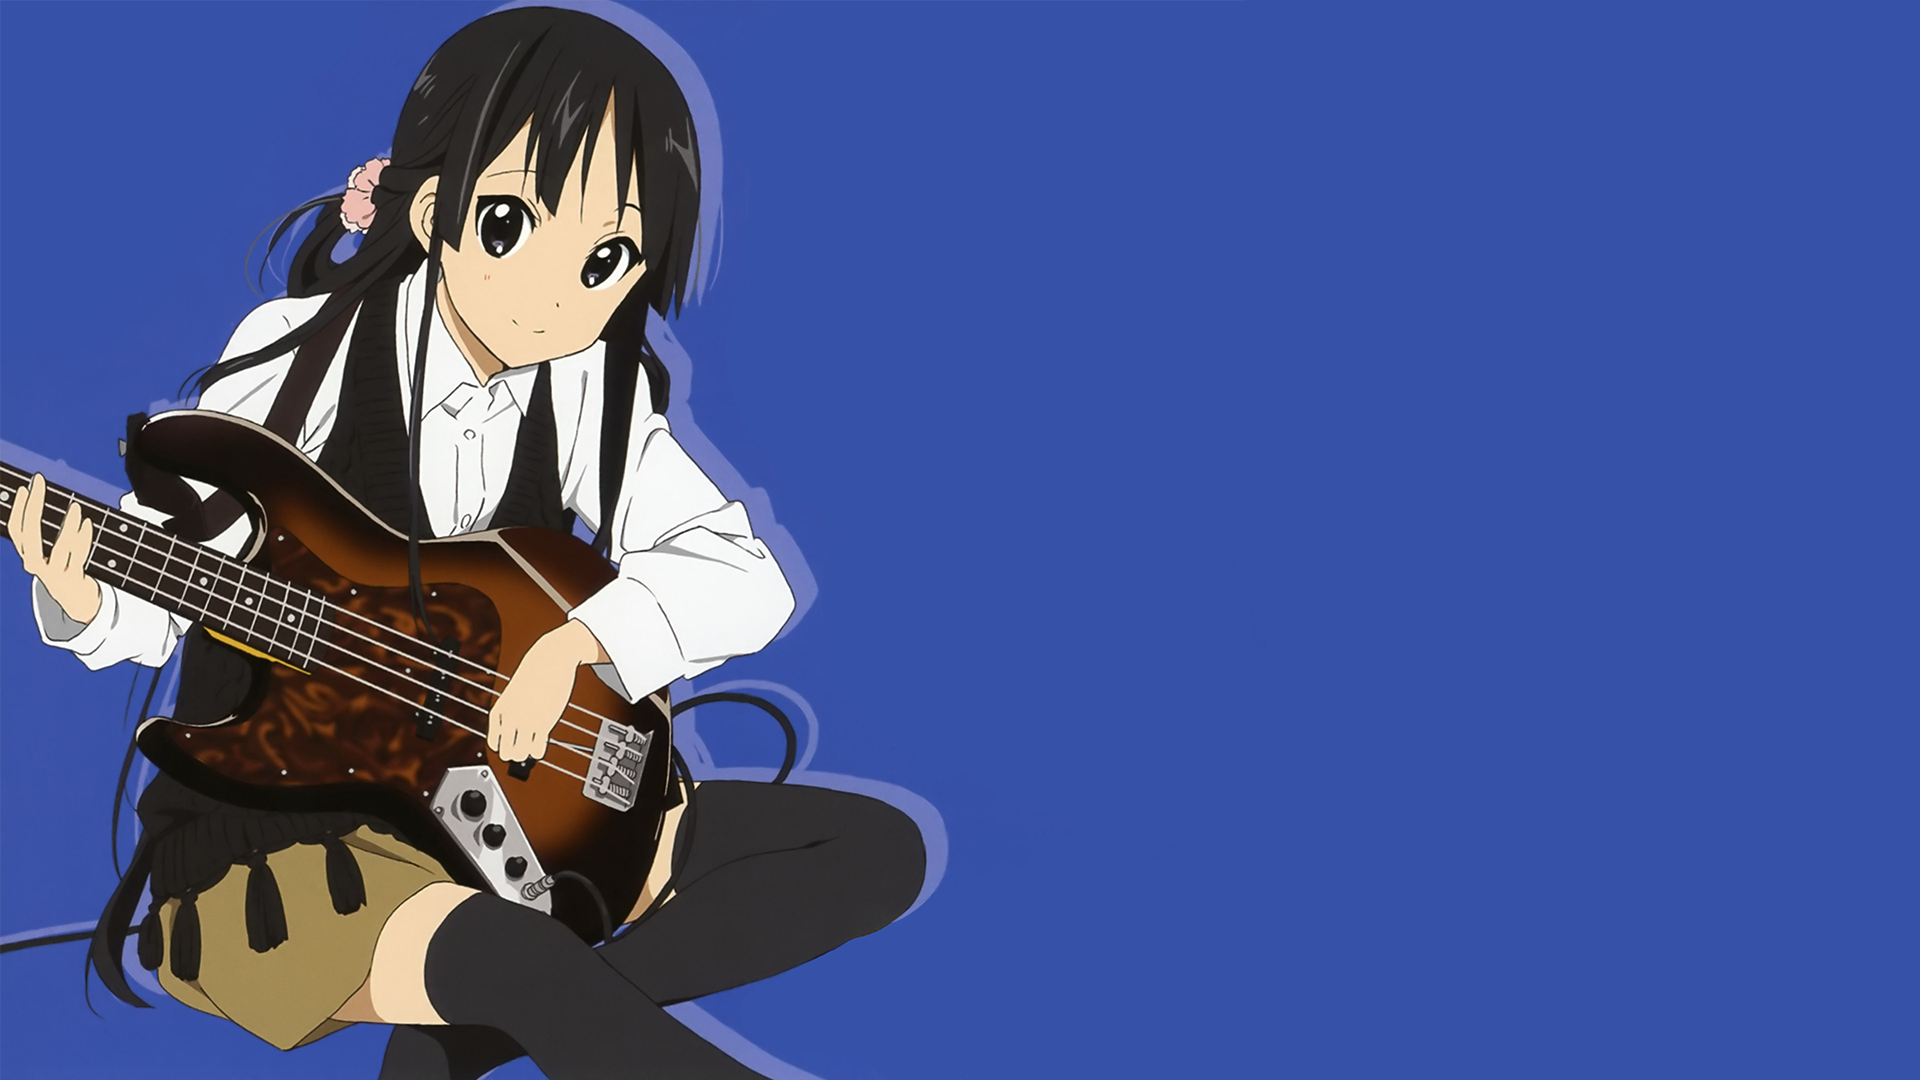 Anime 1920x1080 anime girls anime K-ON! Akiyama Mio blue background guitar musical instrument dark eyes sitting bass guitars